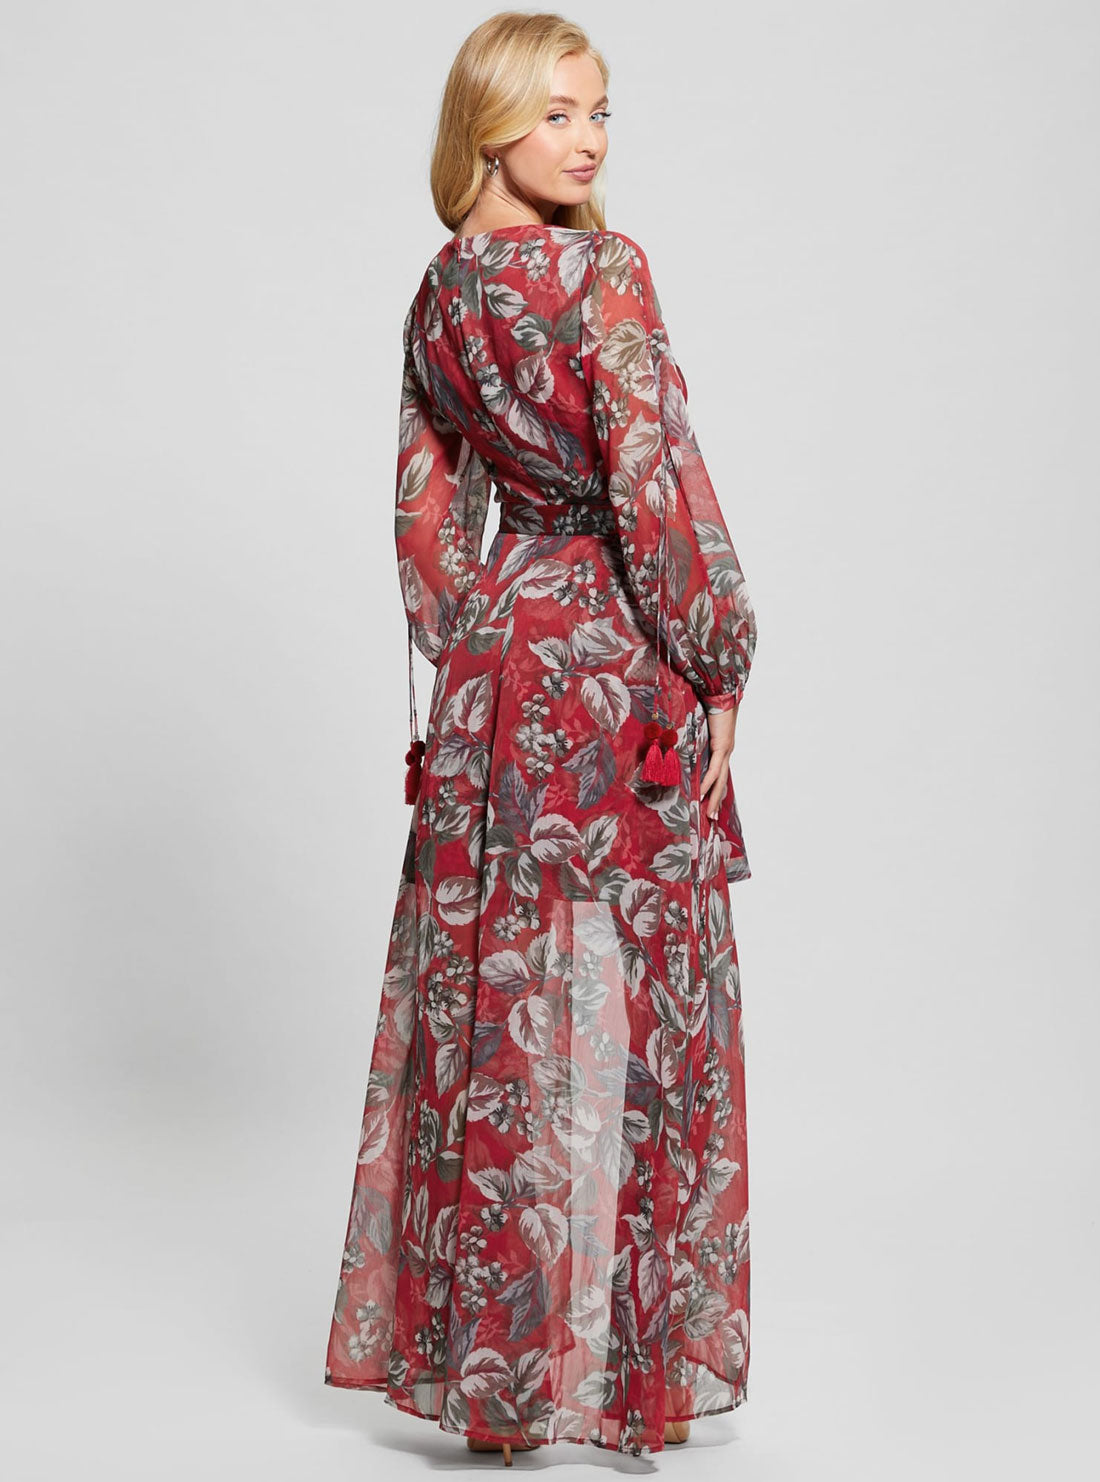 Red Floral Farrah Multi Dress | GUESS Women's Apparel | back view